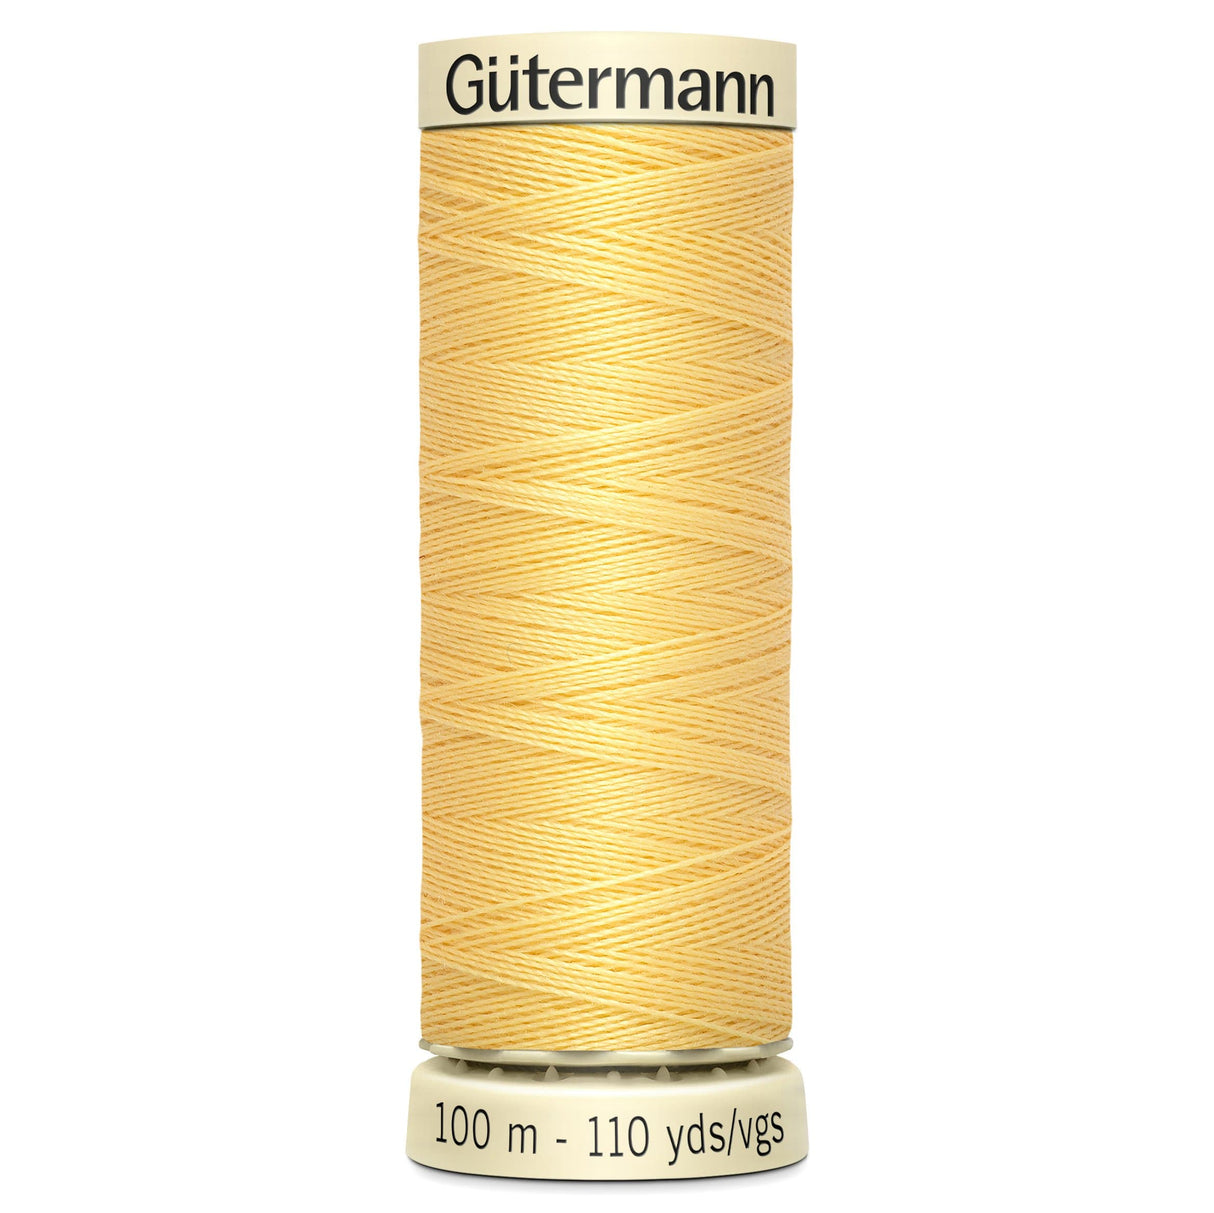 Groves Haberdashery 7 Gutermann Thread Sewing Cotton 100 m Black to Pink